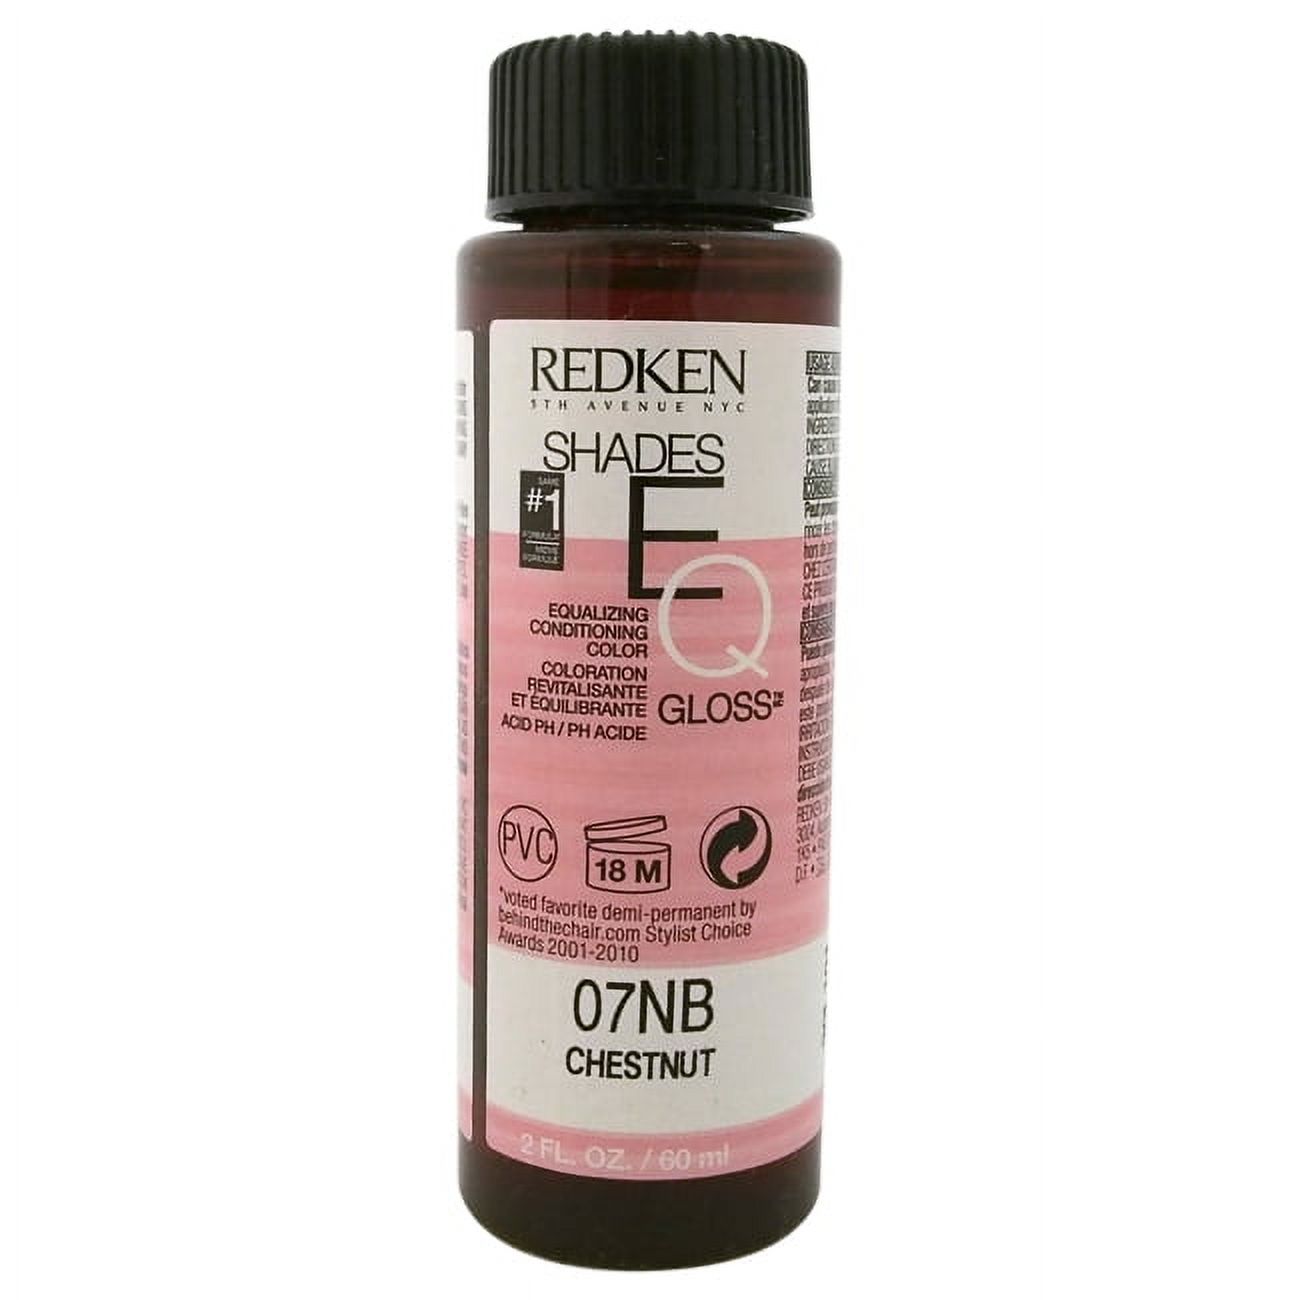 Redken Shades EQ Hair Color Gloss 07Nb - Chestnut for Women, 2 fl oz - image 1 of 8